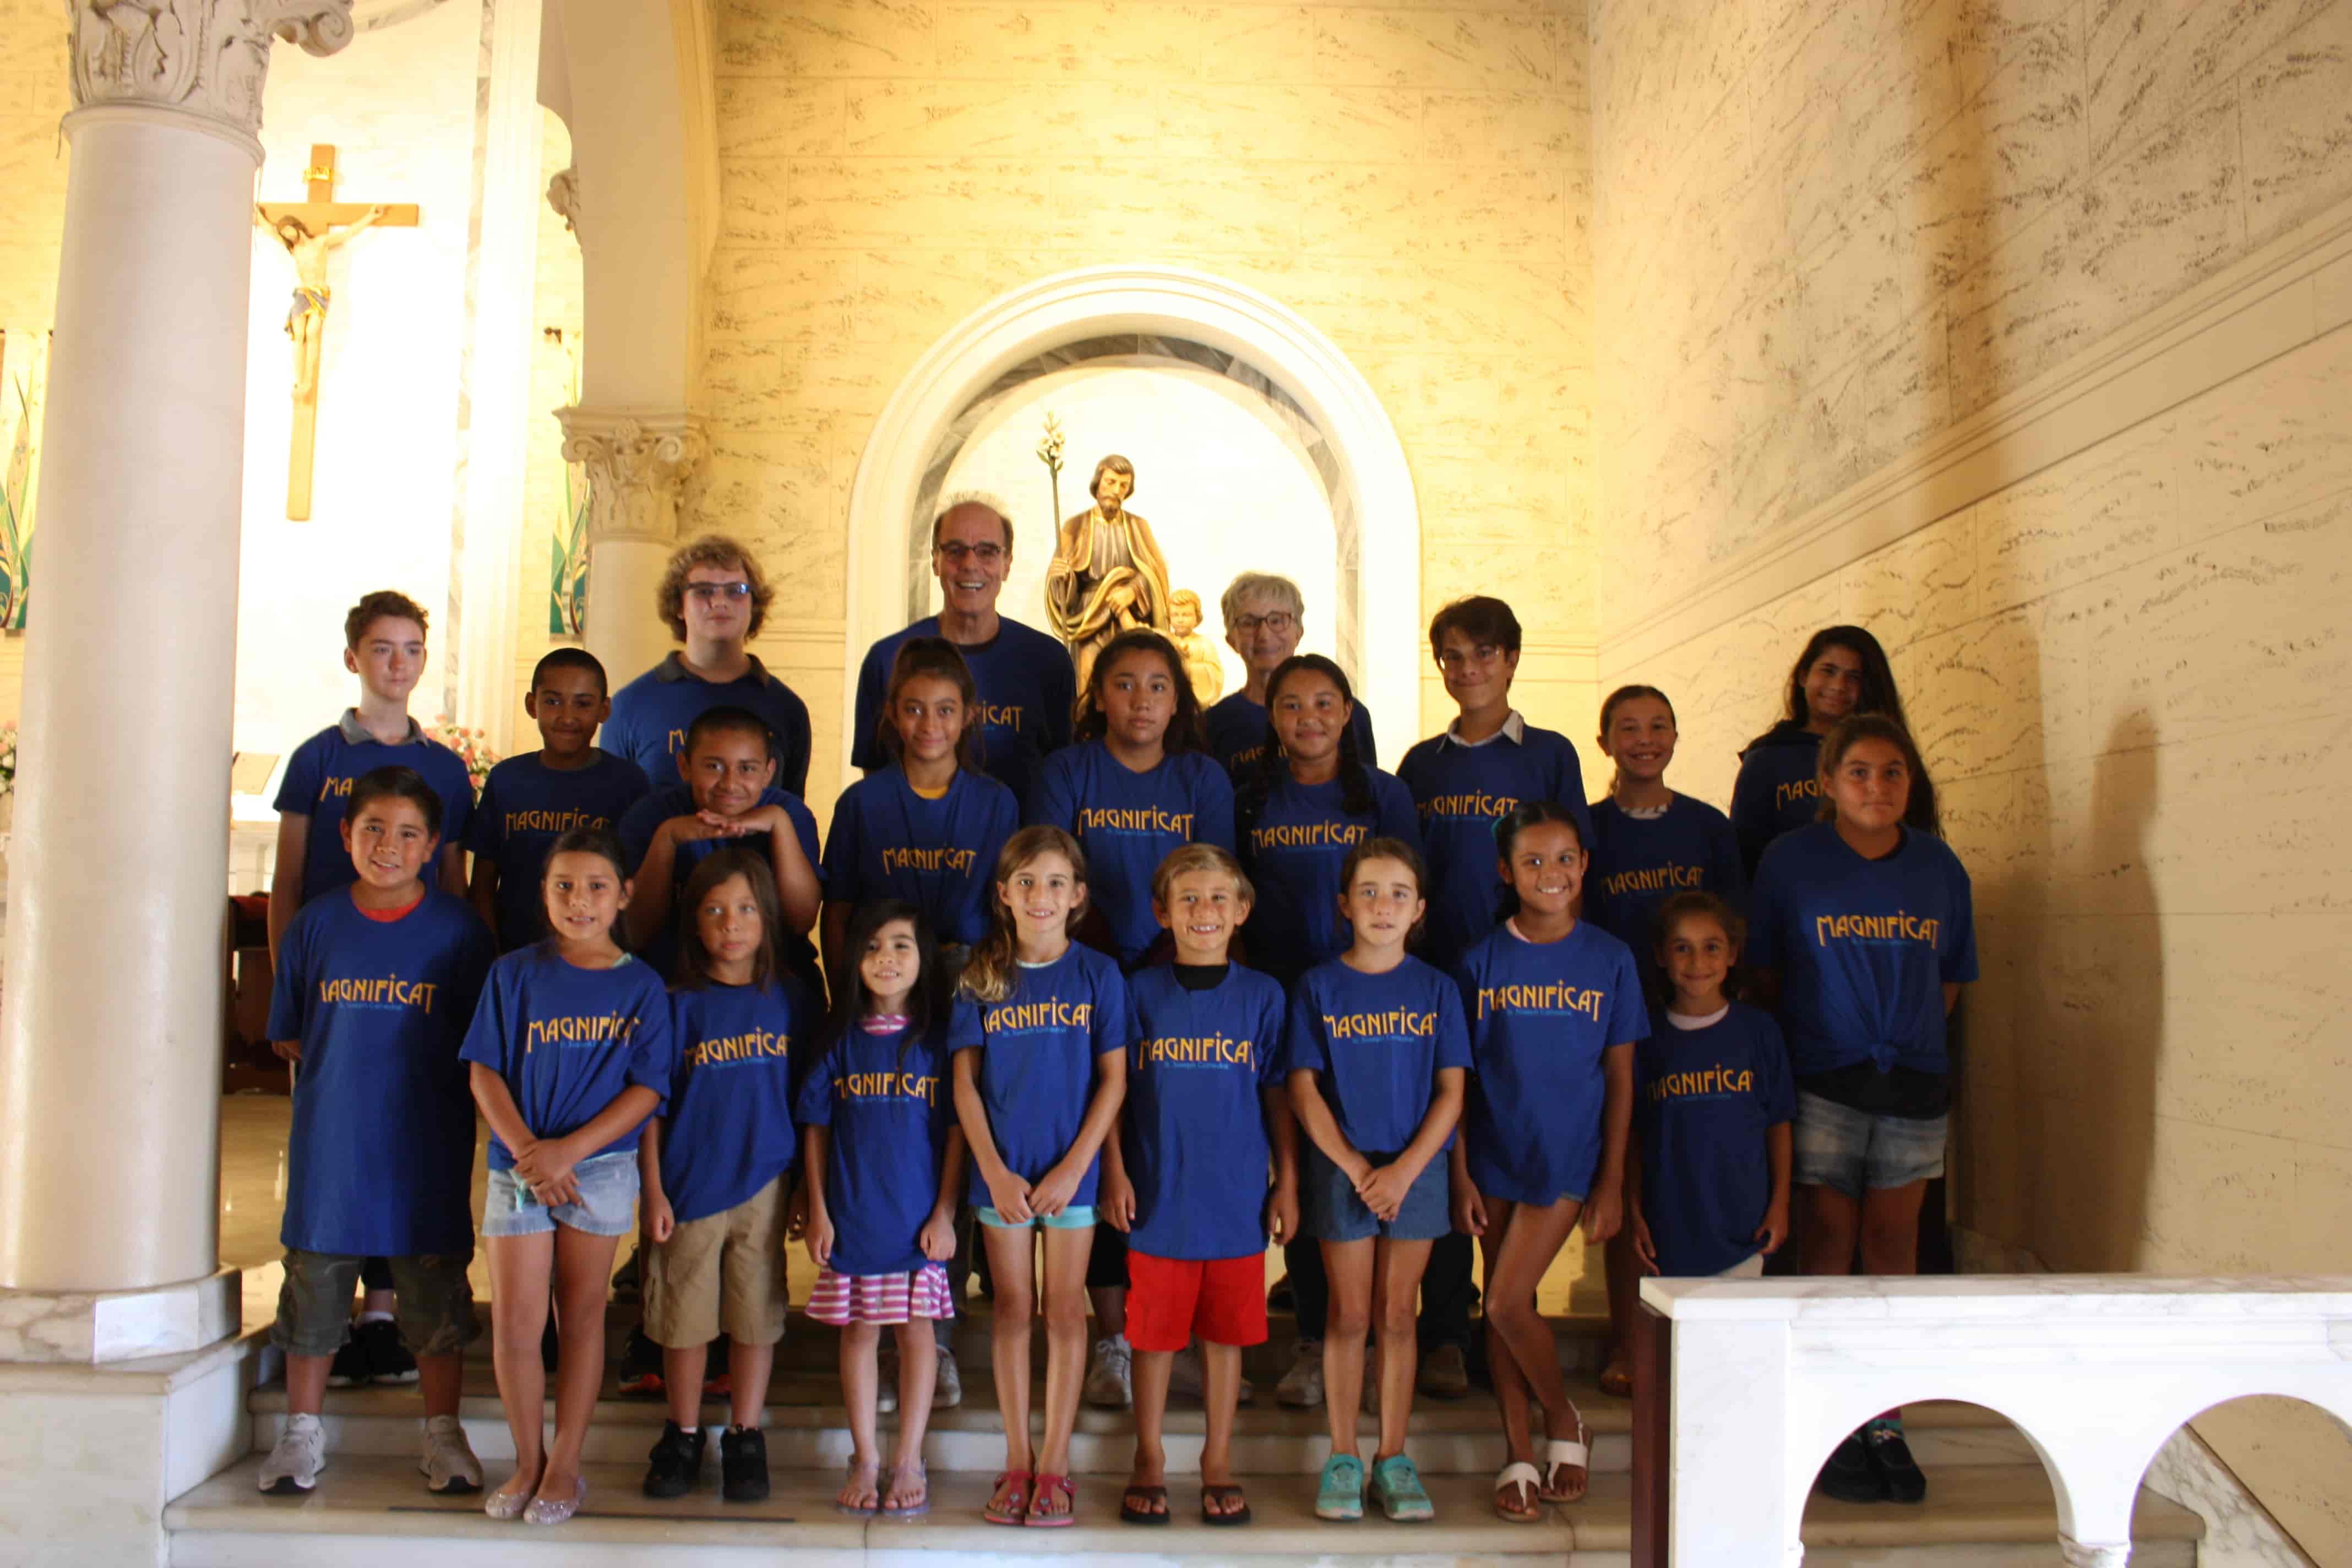 Choir Camp Kids Lead Worship 10:30 Mass